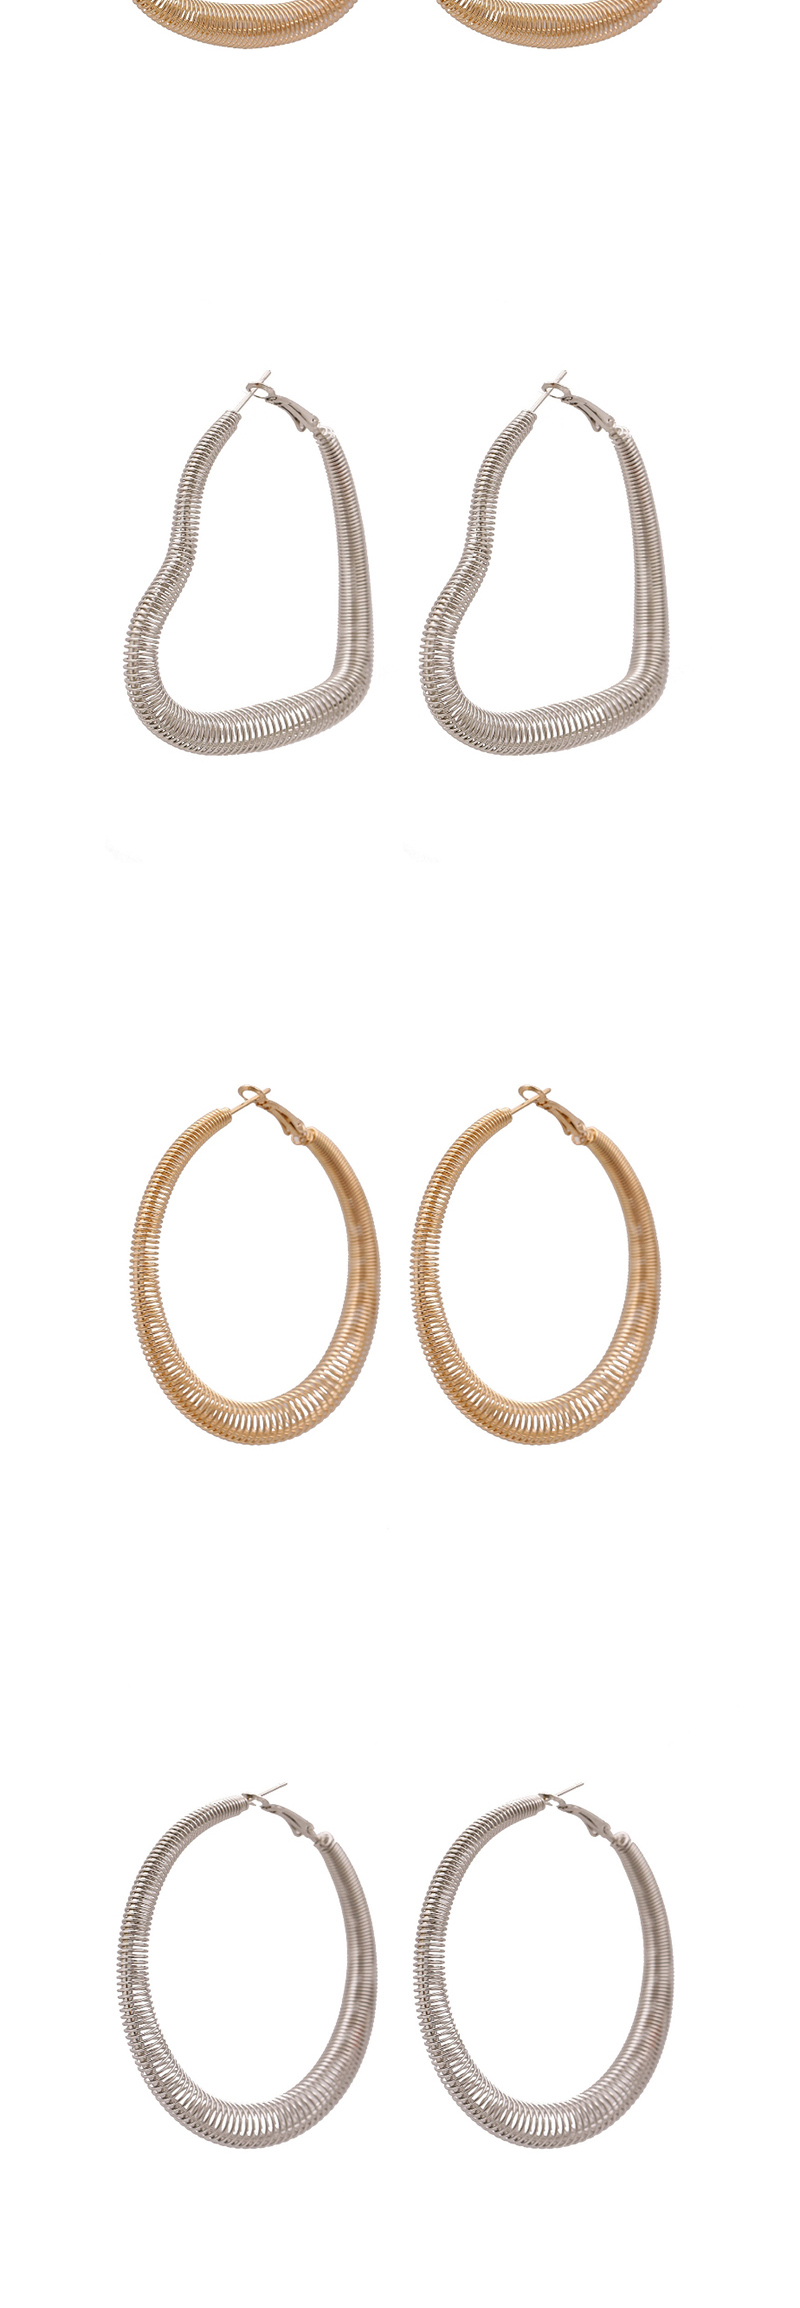 Fashion Heart + Gold Alloy Geometric Spring Studs,Hoop Earrings